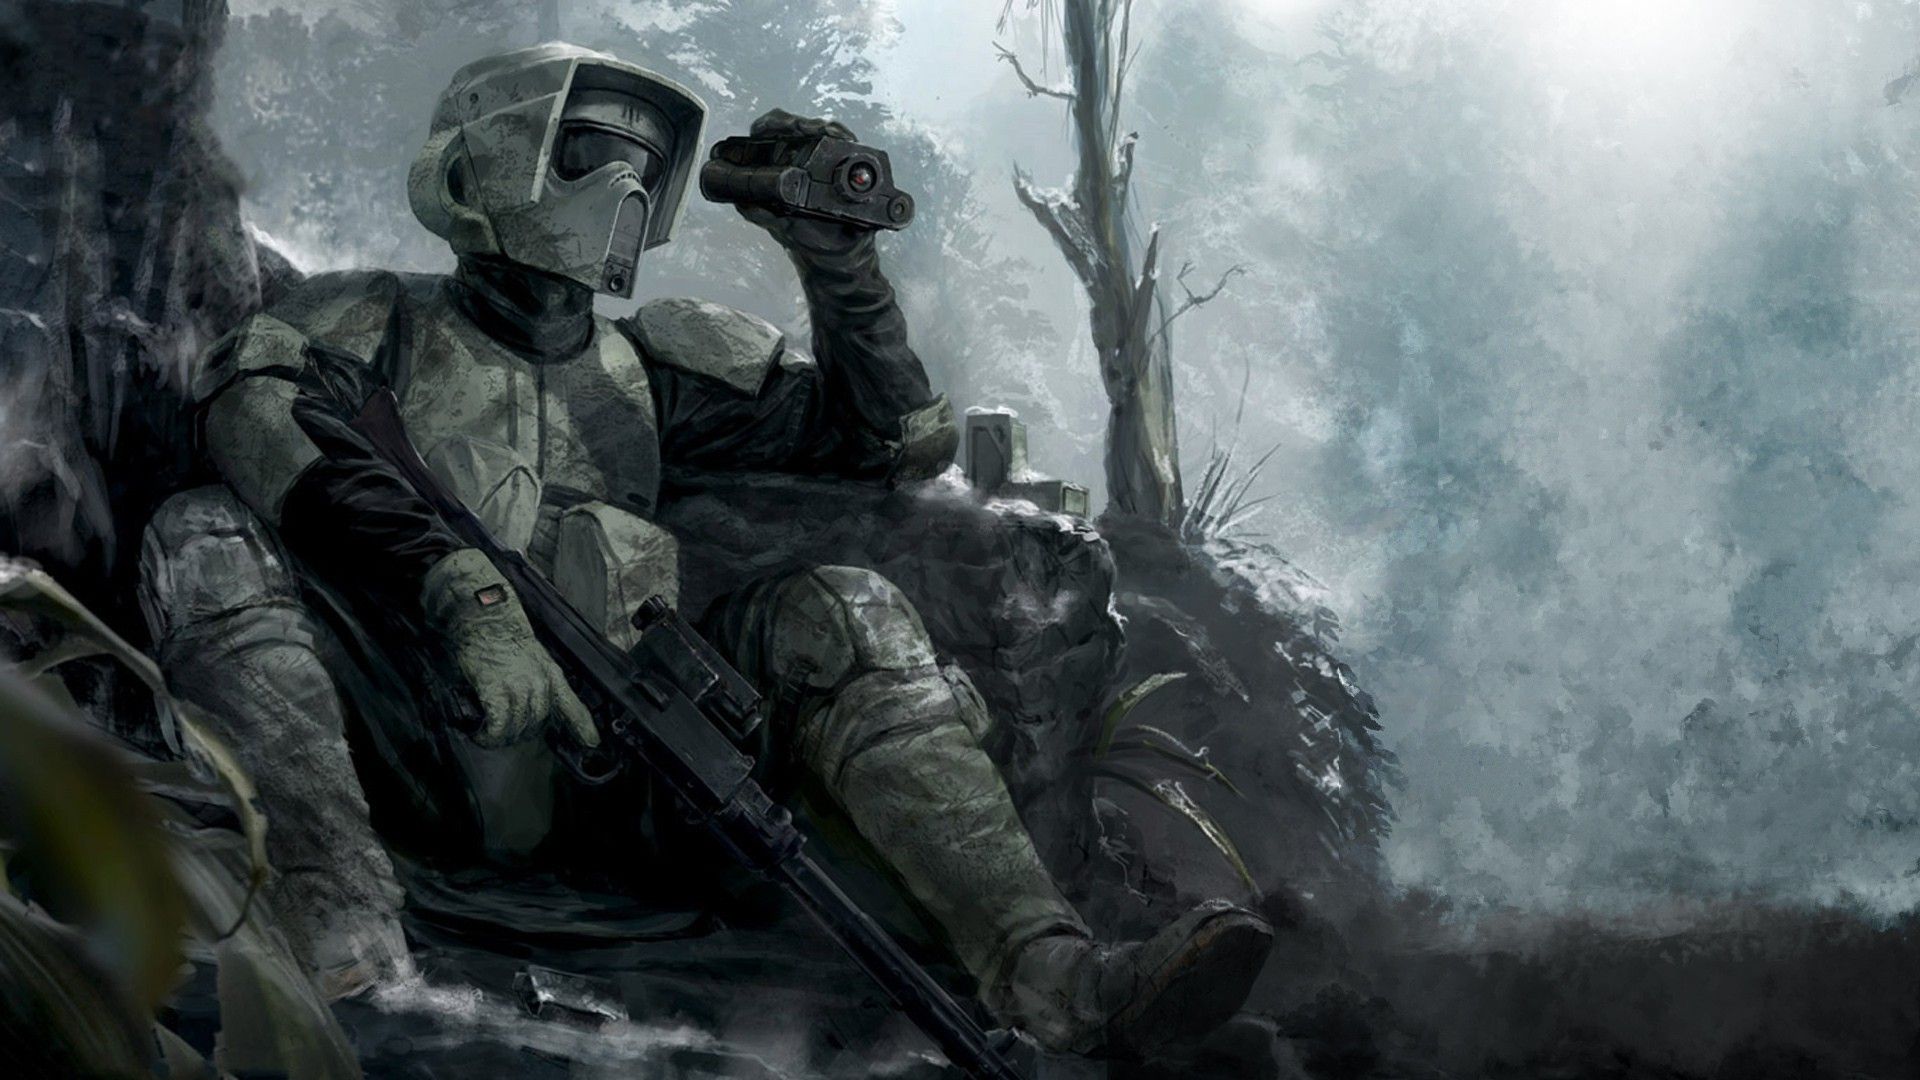 Star Wars, artwork, soldier, science fiction, explosion, military, stormtrooper, screenshot, mercenary. Mocah HD Wallpaper